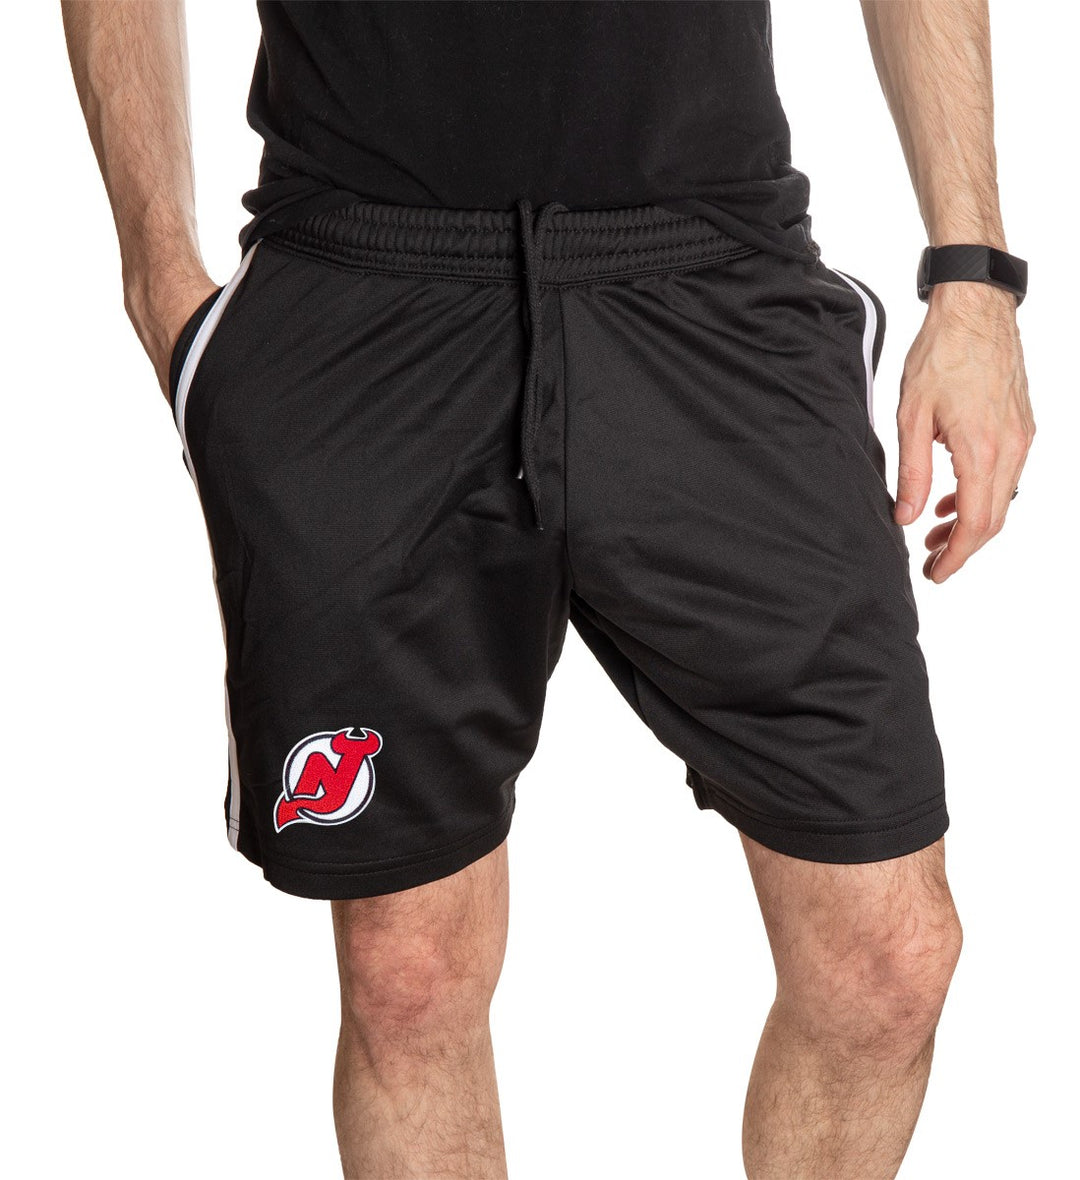 New Jersey Devils Premium Apparel and Leisurewear